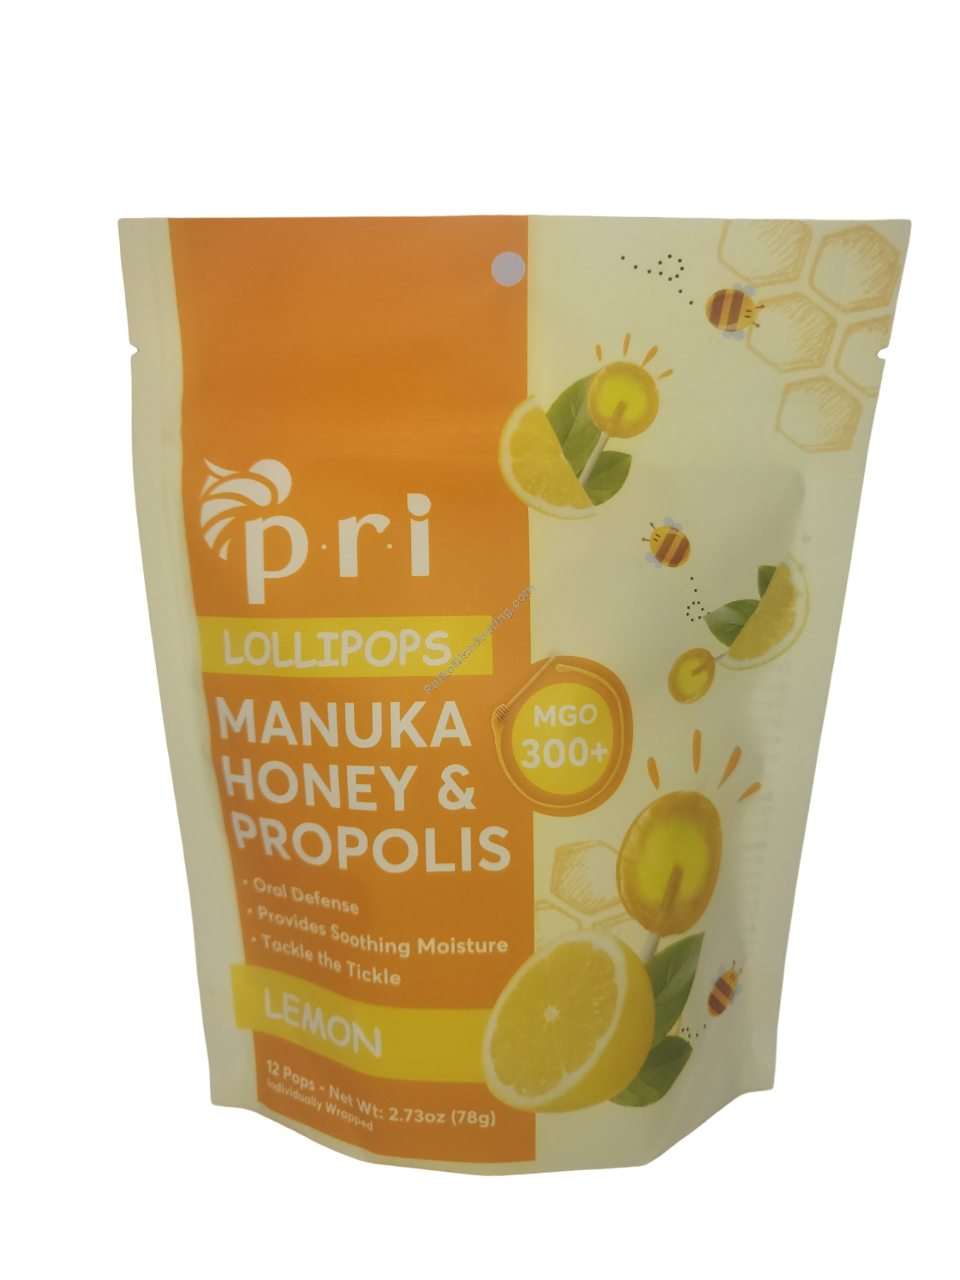 Product Image: Manuka Honey & Propolis Lollipops Lemon